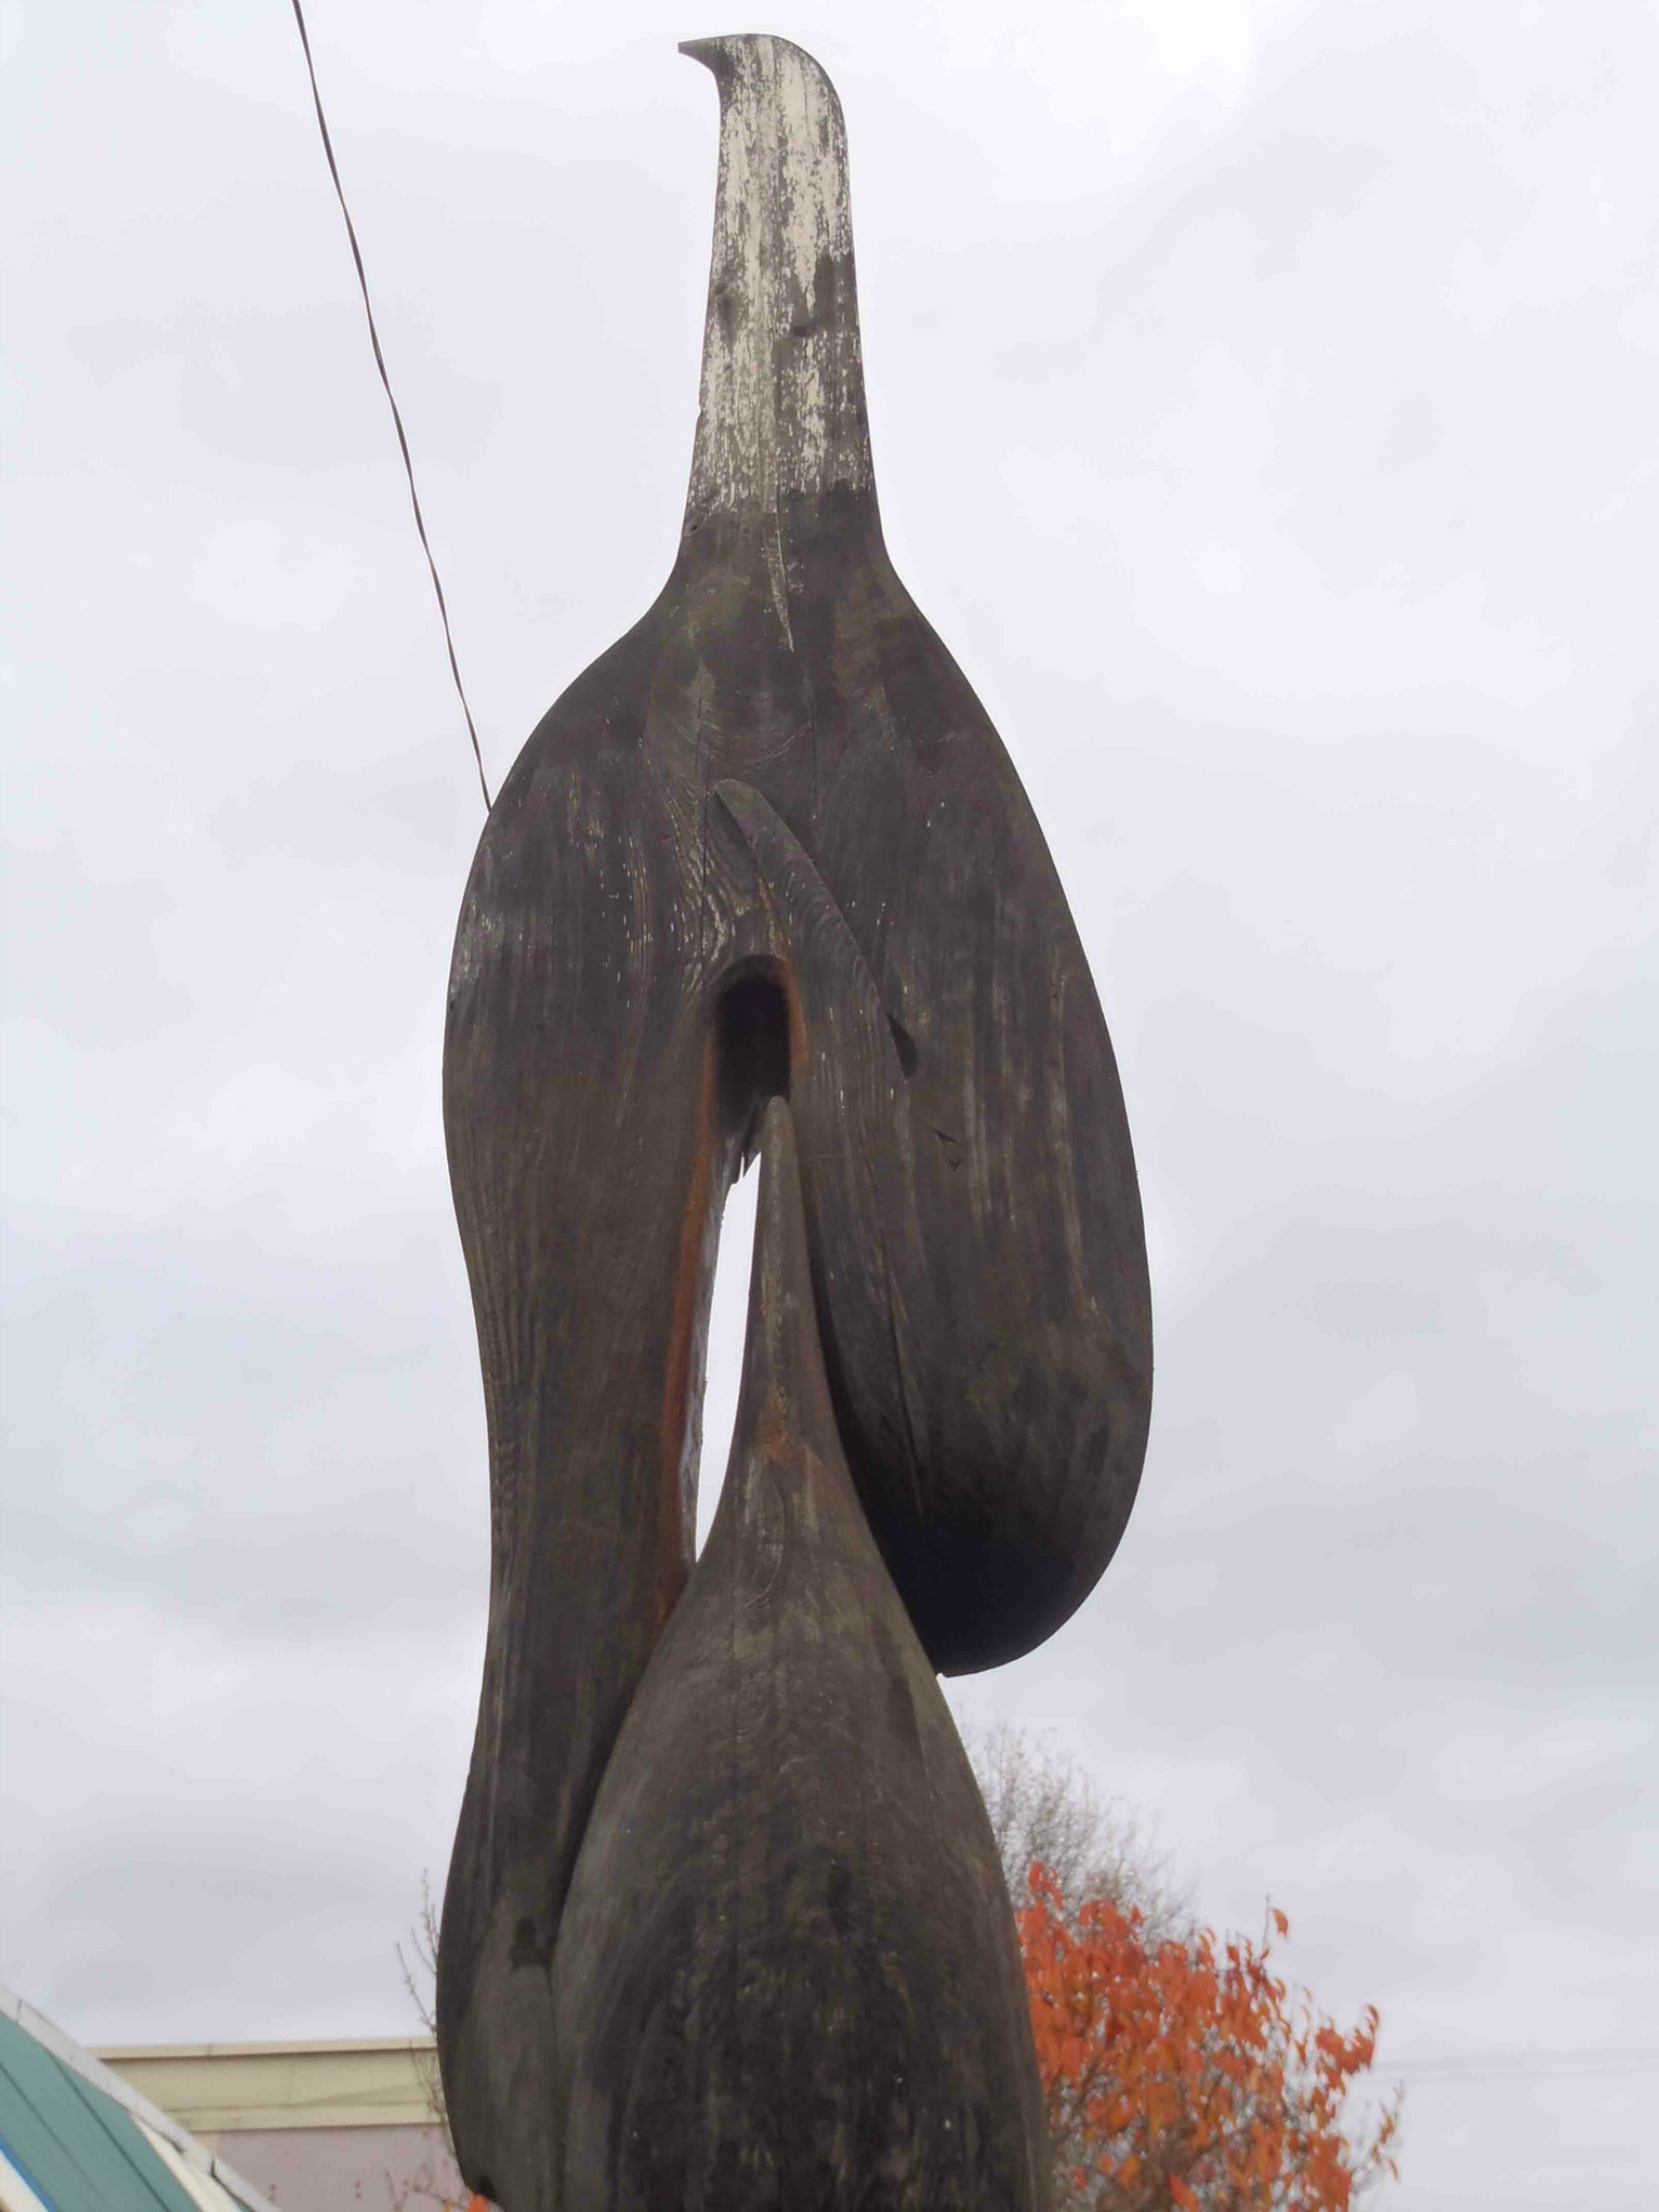 Transition totem pole, Killer Whale father figure, Station Street, Duncan, B.C.